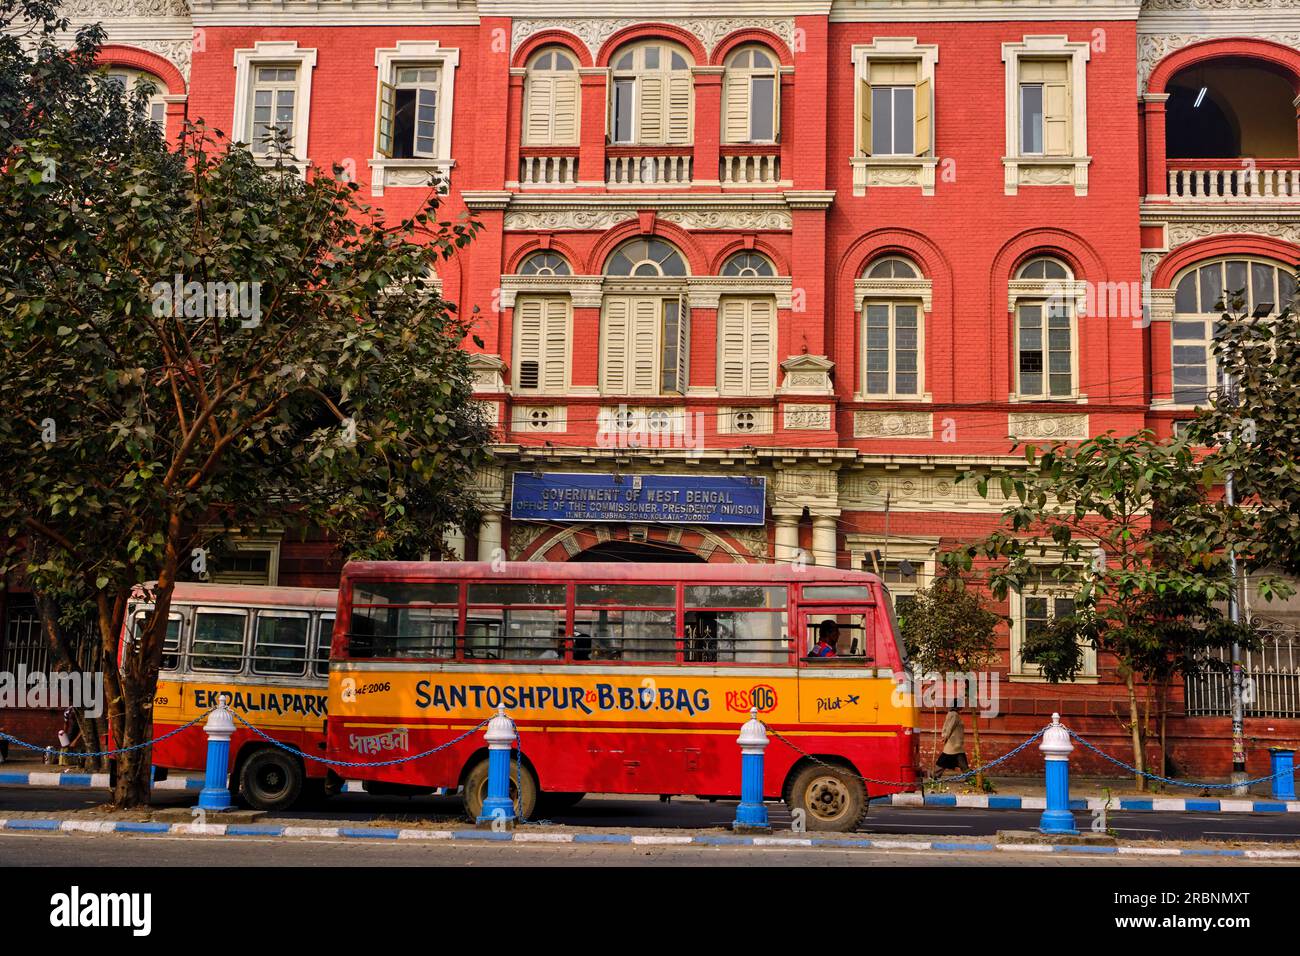 India, West Bengal, Kolkata, Calcutta, colonial architecture Stock Photo